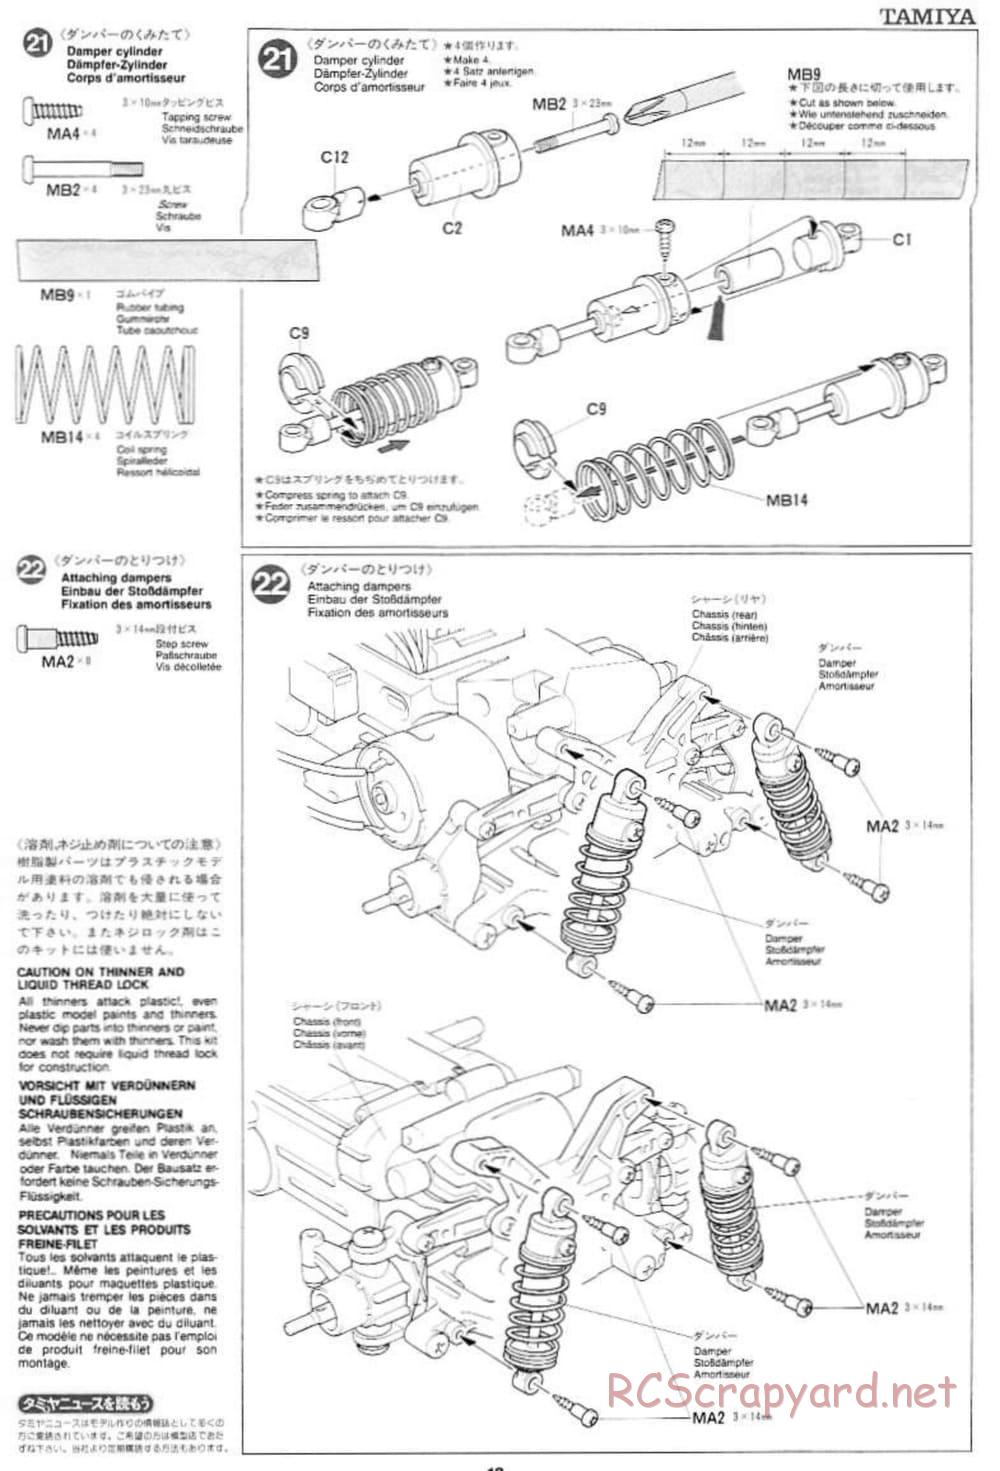 Tamiya - Subaru Impreza WRC - TL-01 Chassis - Manual - Page 13